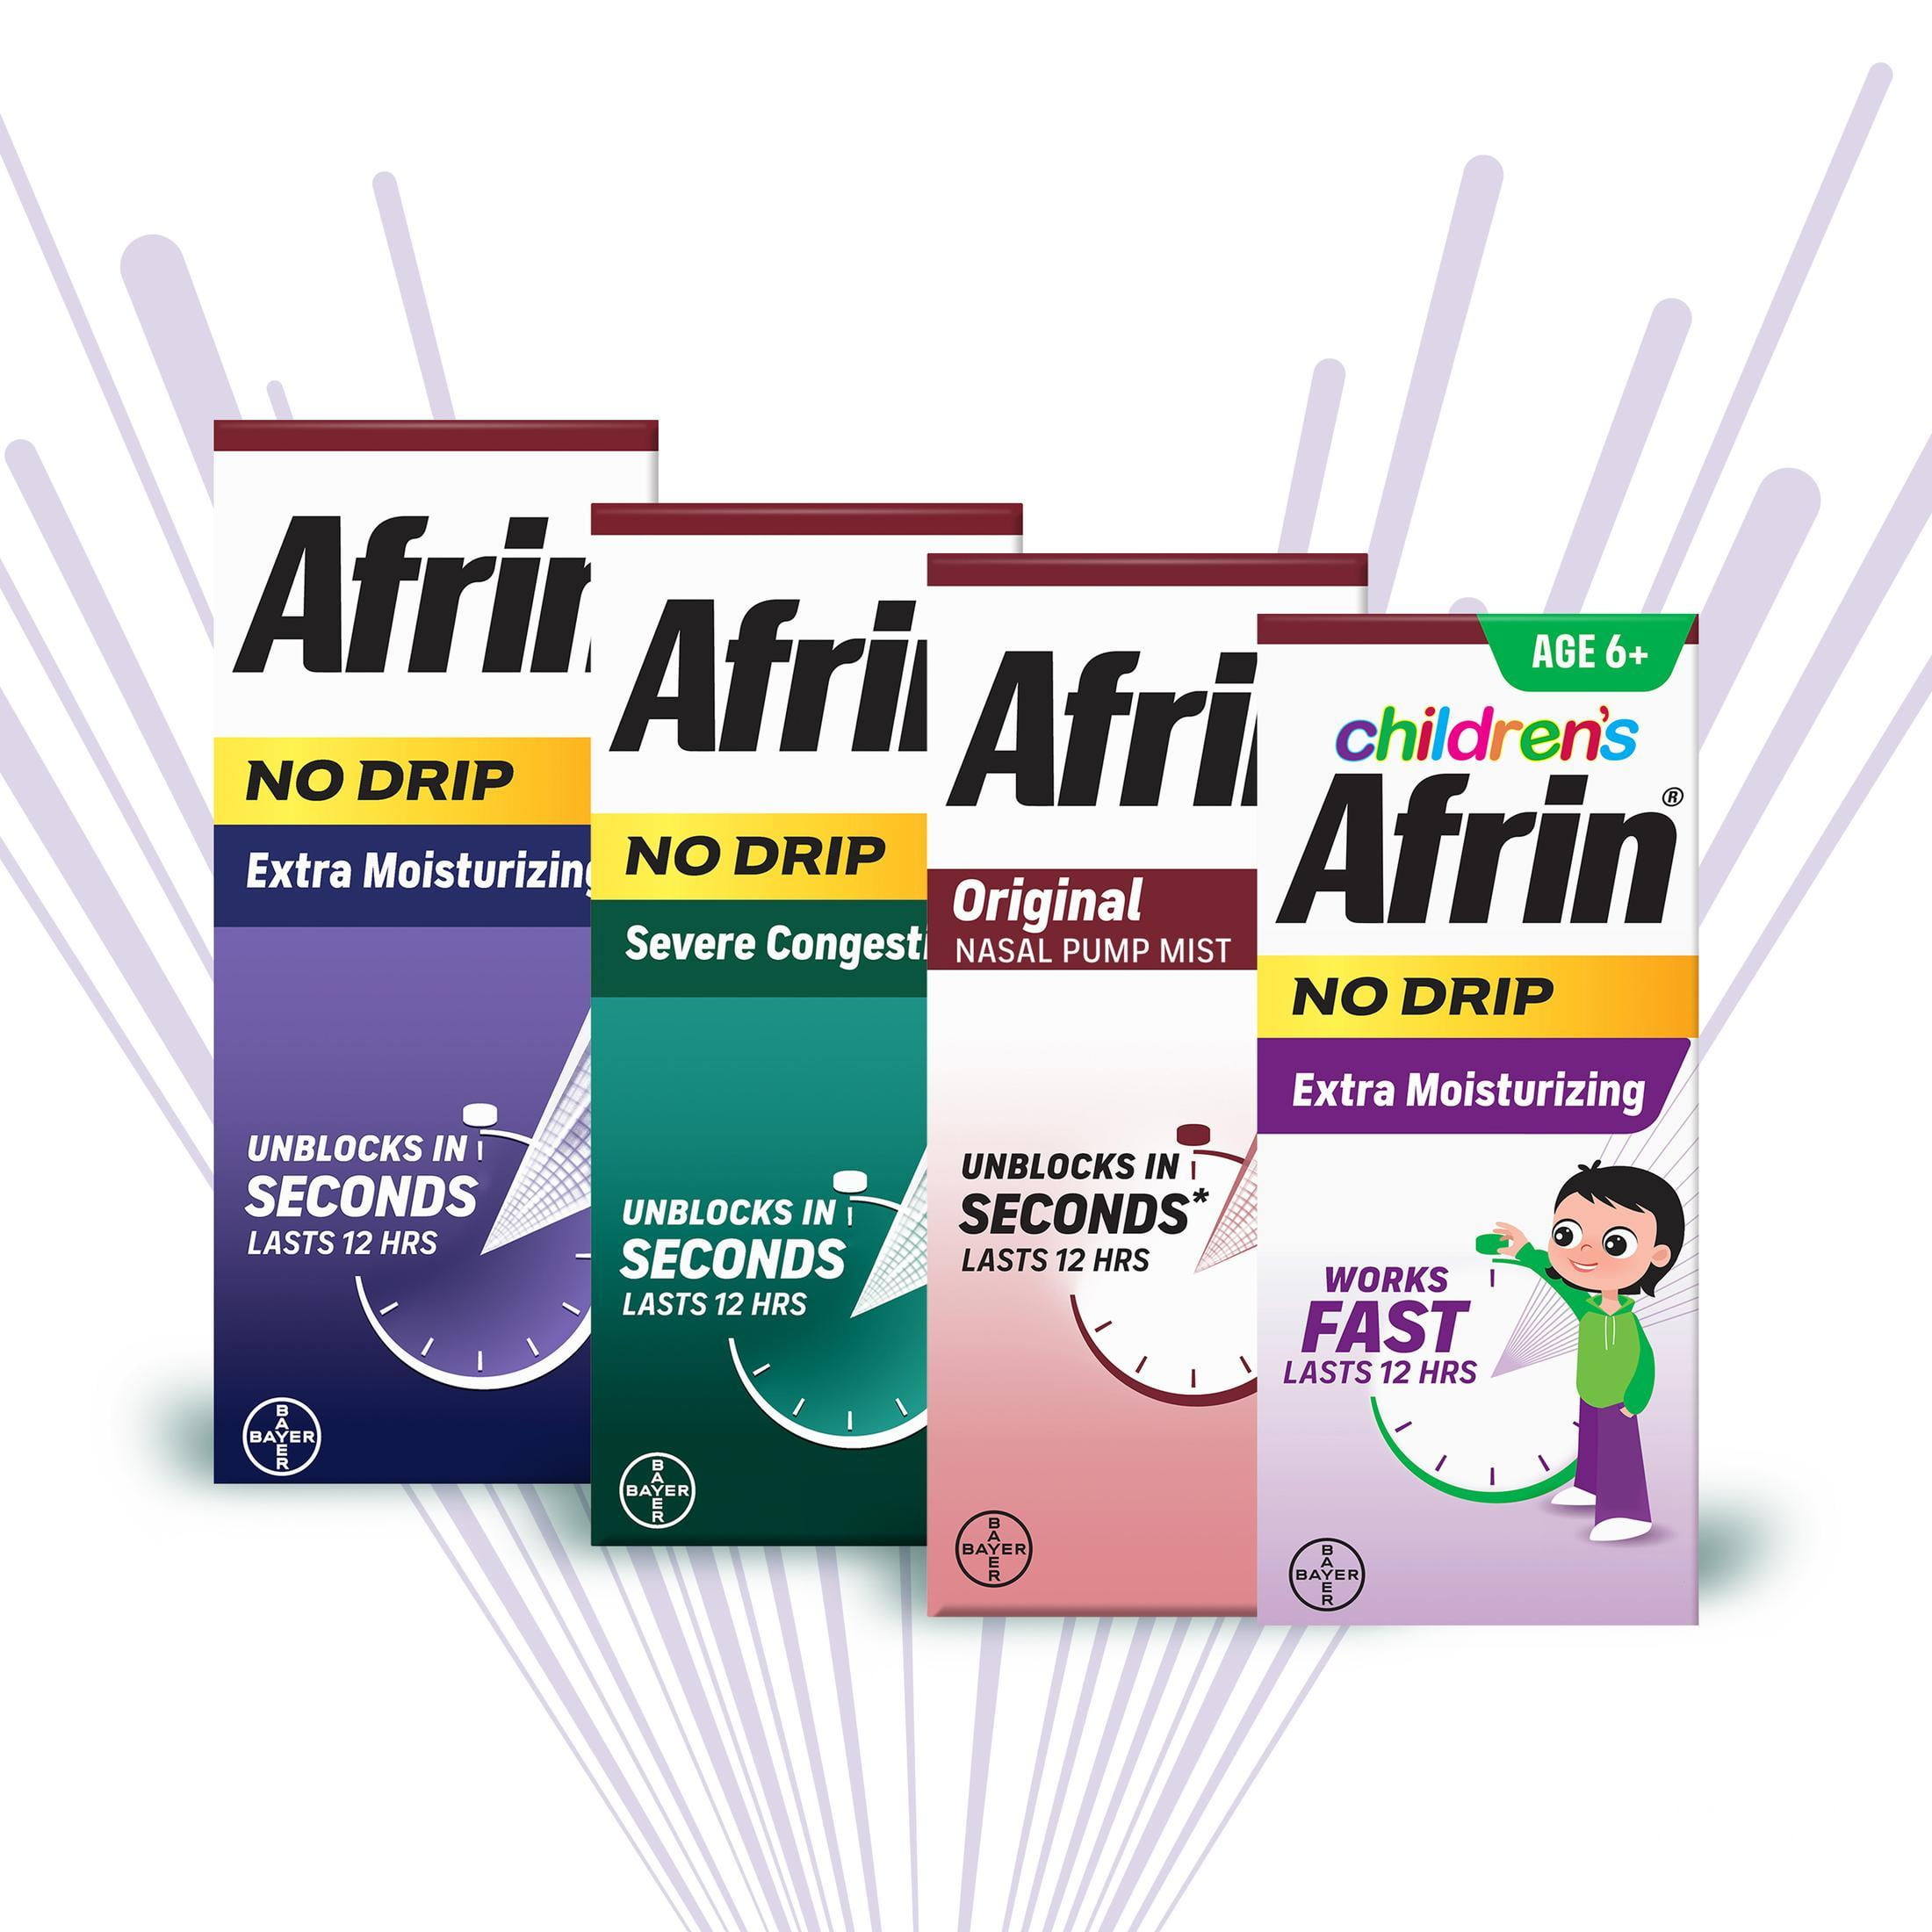 Afrin® Extra Moisturizing Stuffy Nose Pump Mist